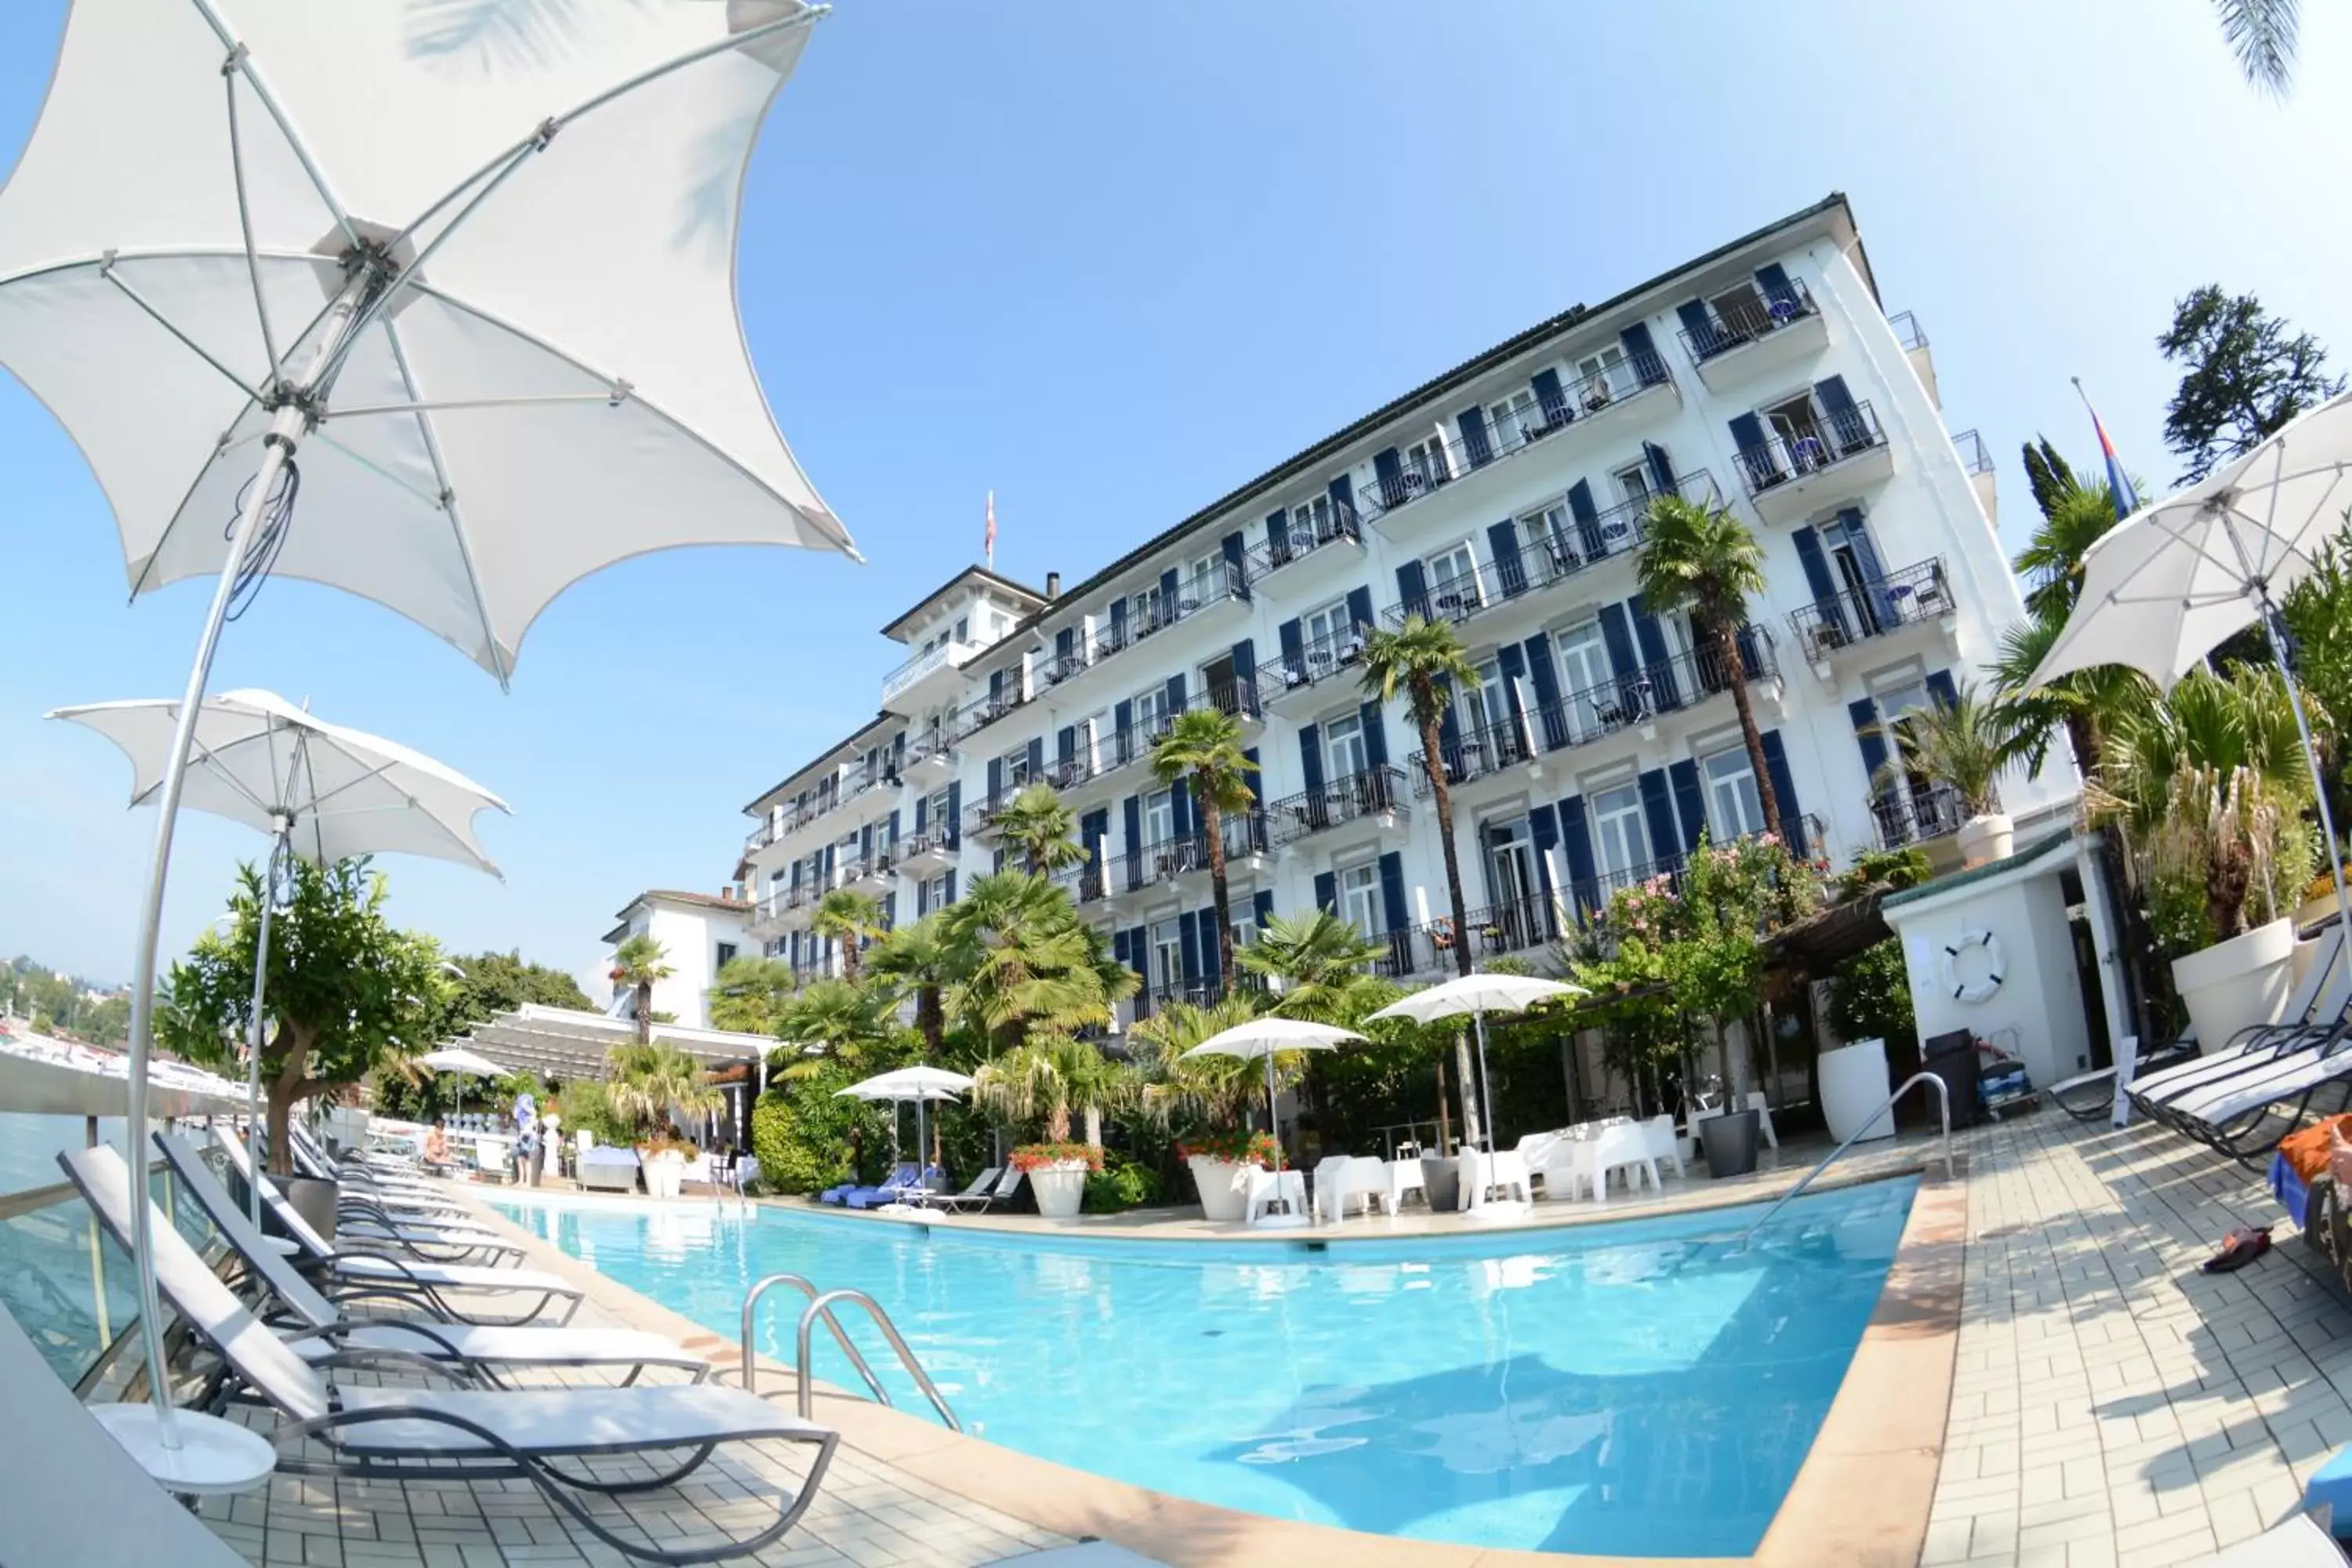 Swimming Pool in Hotel Lido Seegarten